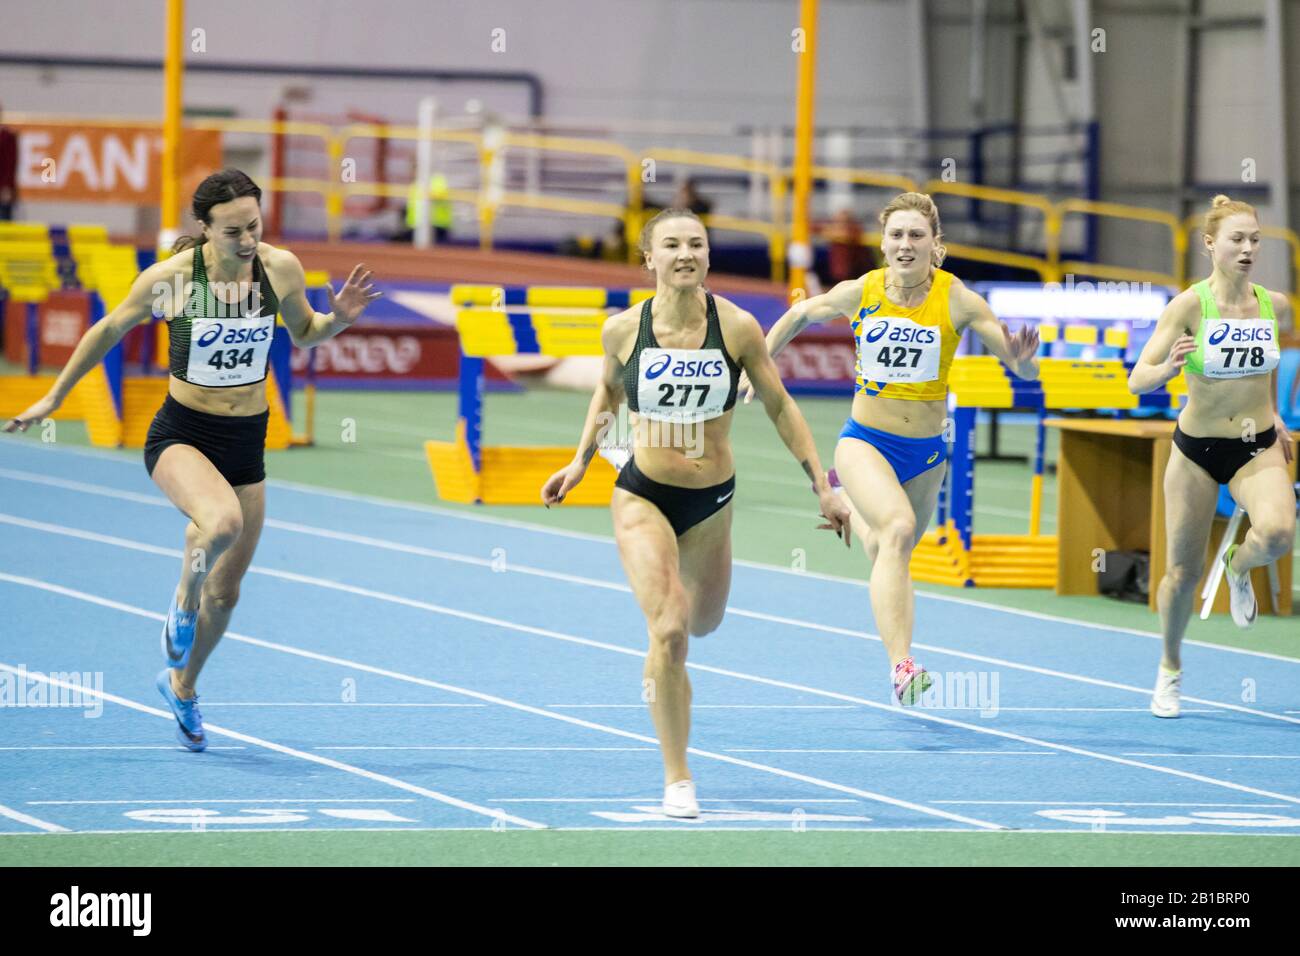 SUMY, UKRAINE - FEBRUARY 20, 2020: Viktoriya Ratnikova wins 60m final at Ukrainian indoor track and field championship 2020. Stock Photo